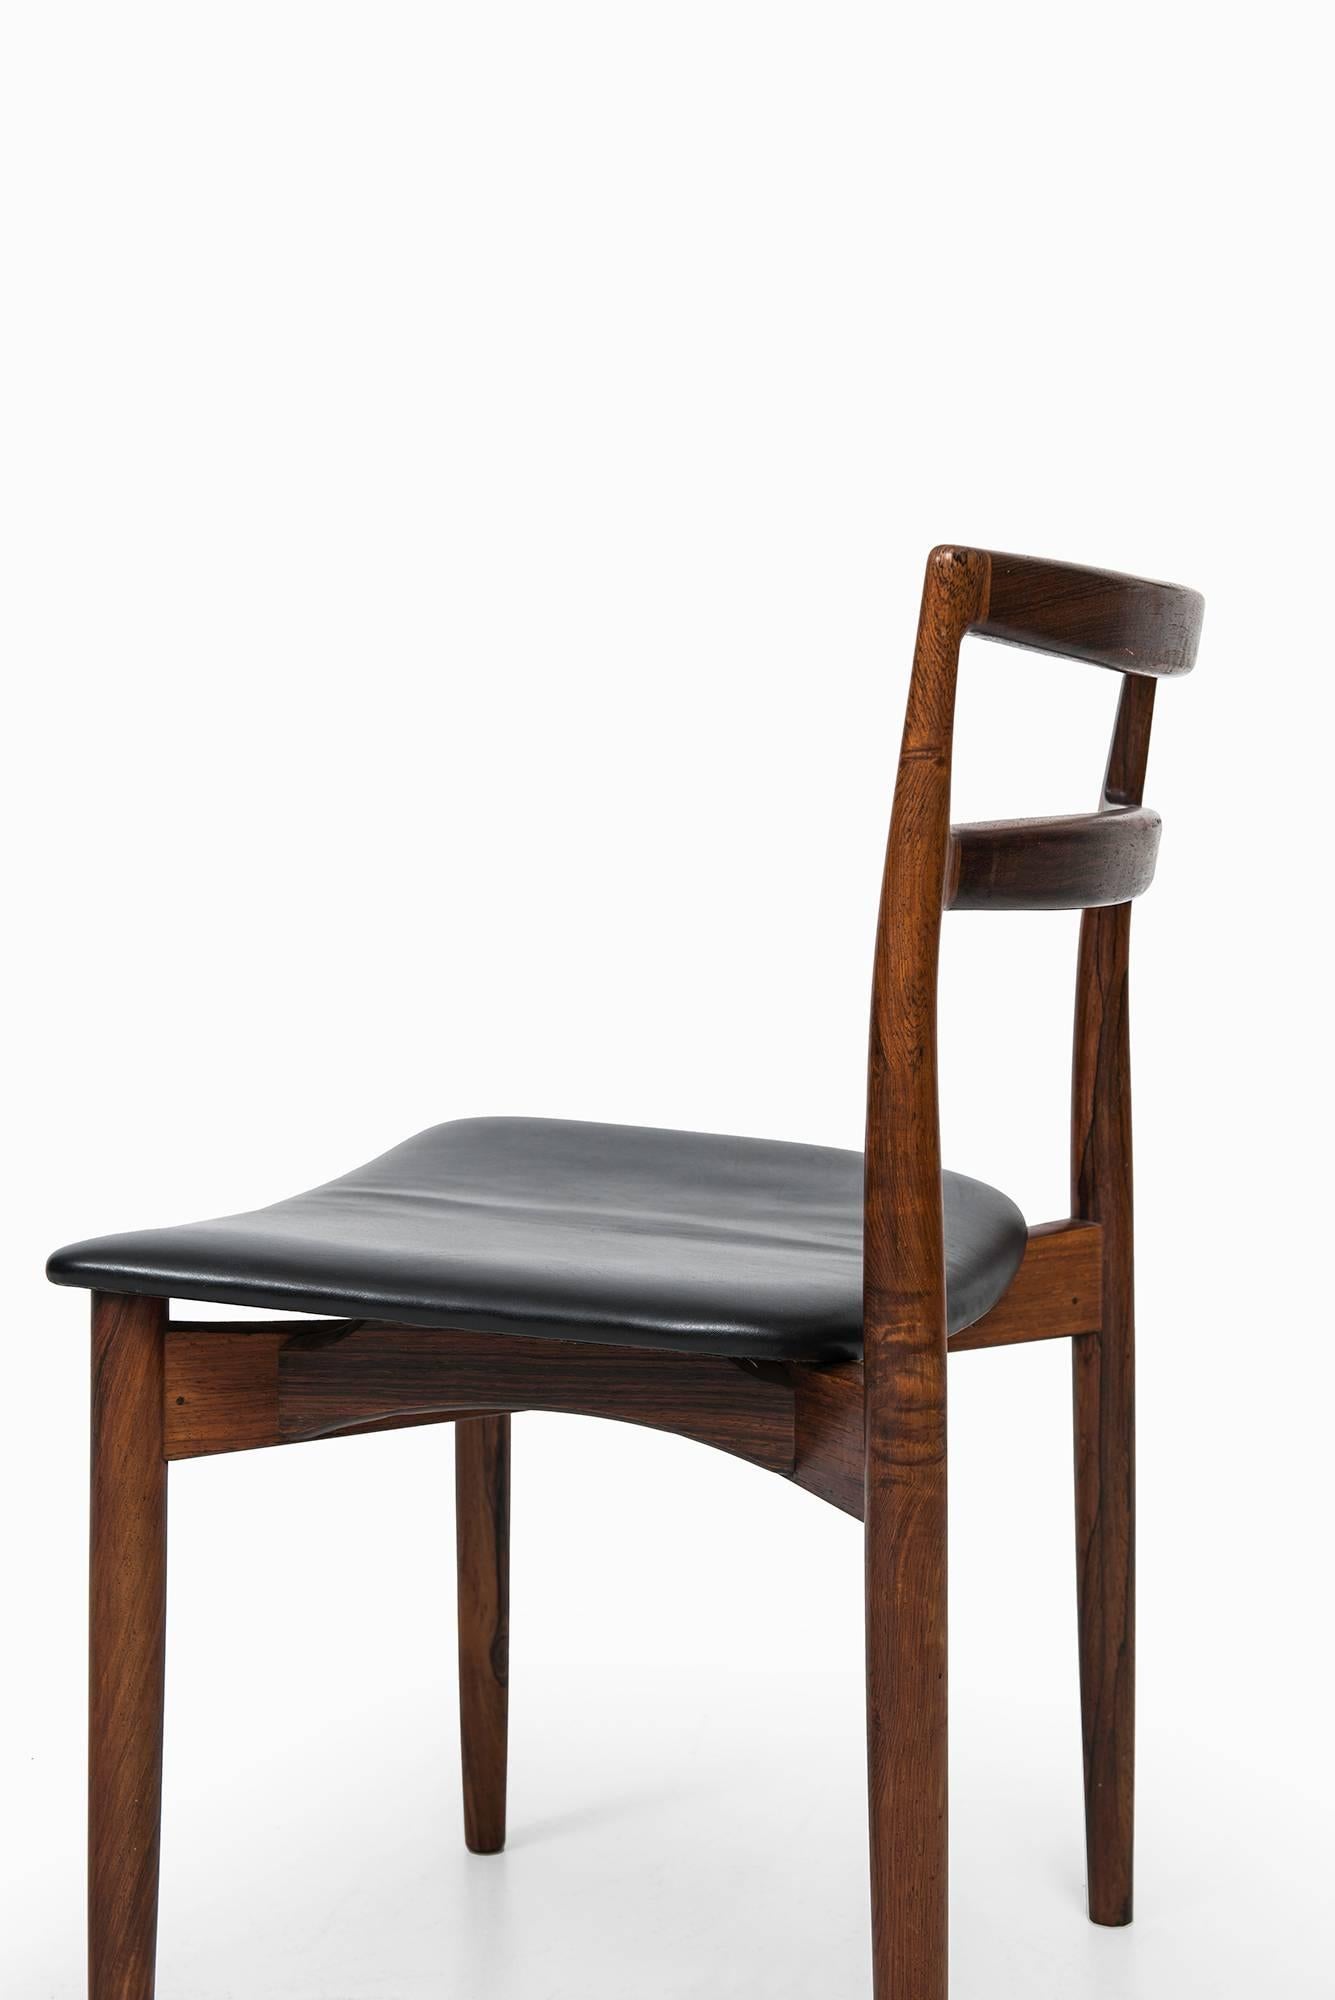 Scandinavian Modern Harry Østergaard Dining Chairs Model 61 Produced by Randers Møbelfabrik